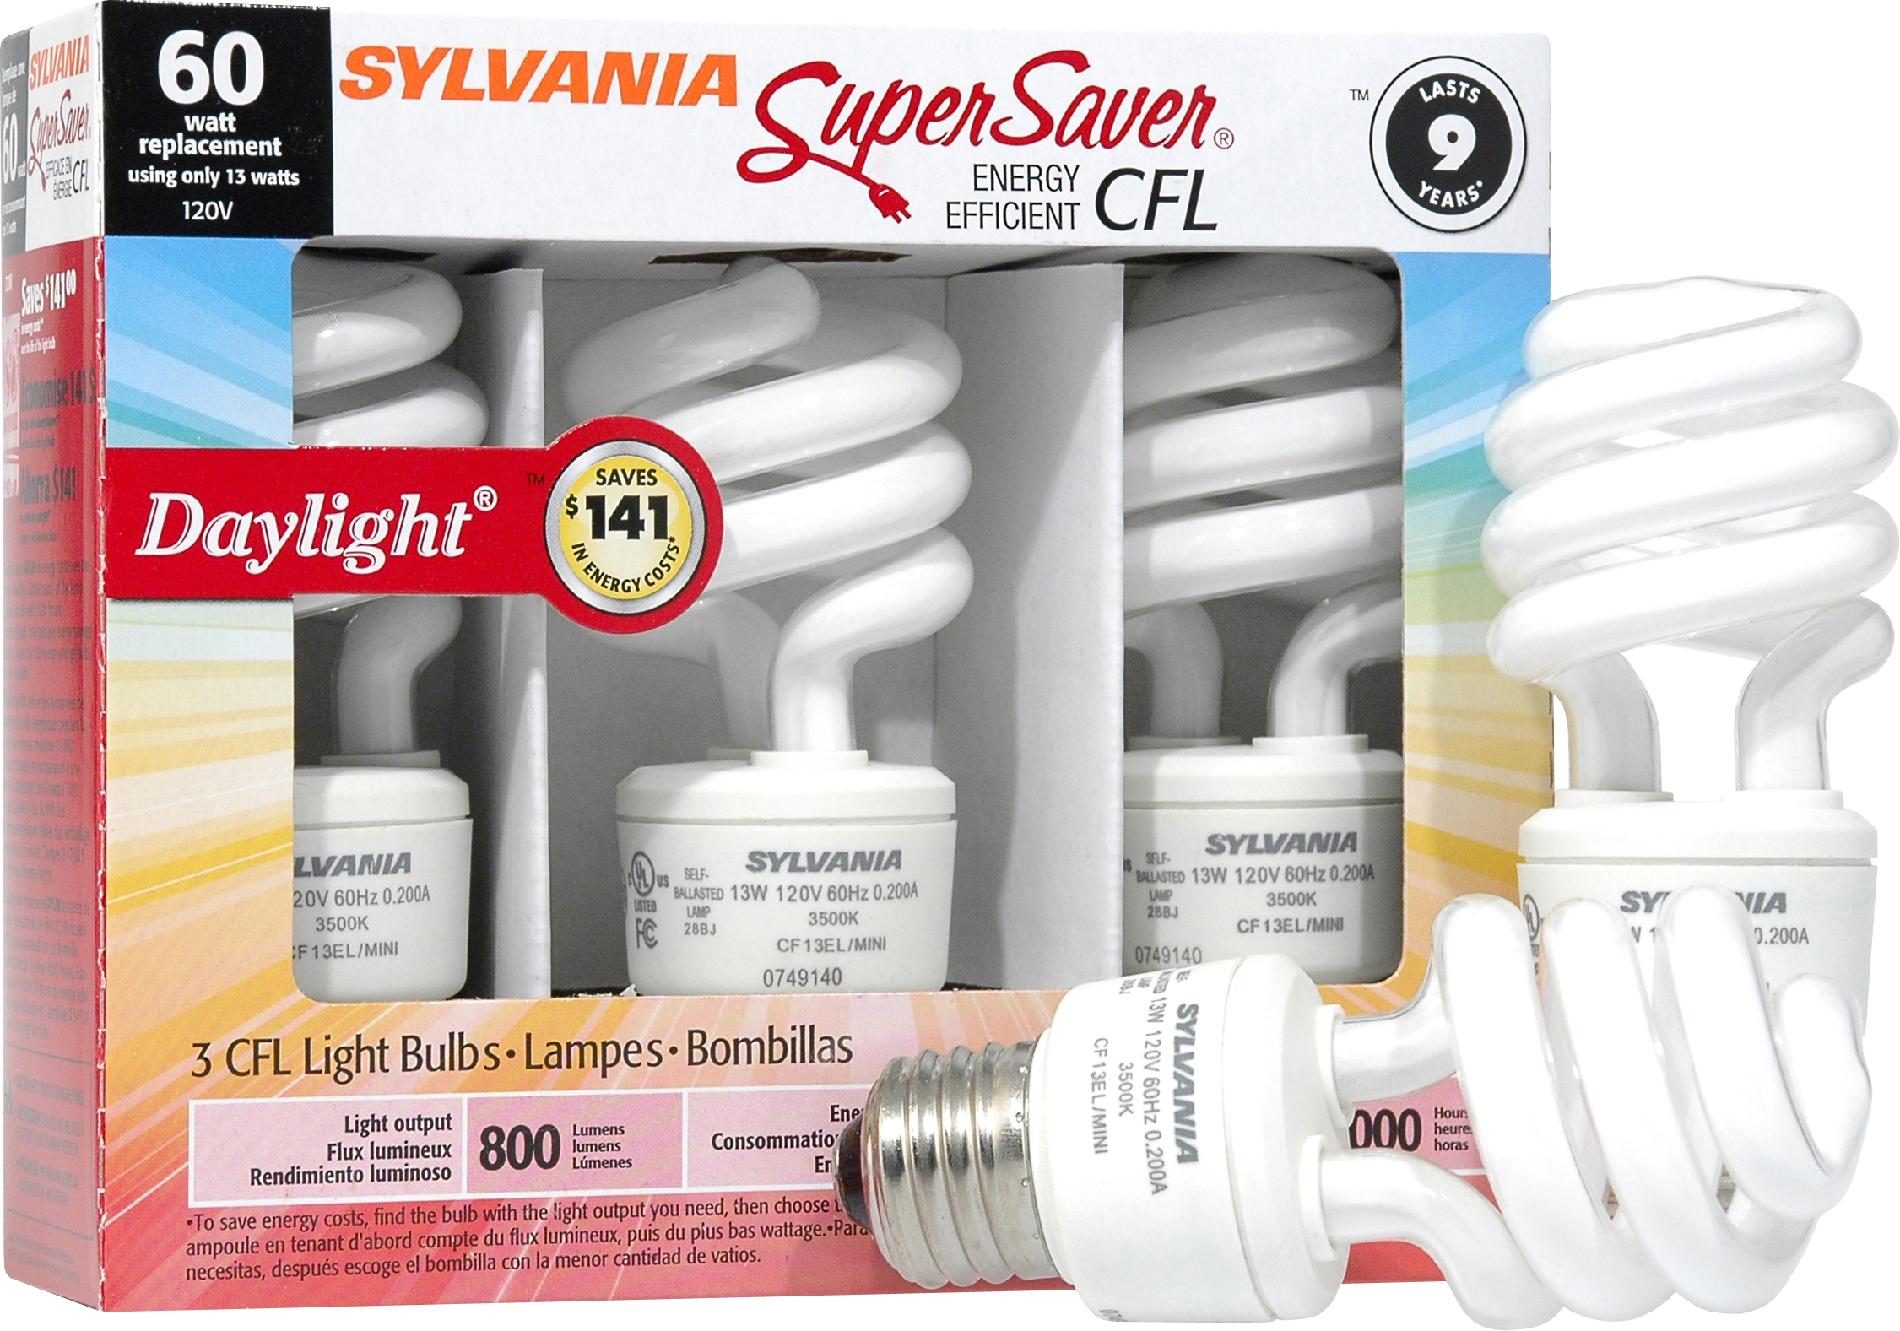 Sylvania Fluorescent Daylight Twist Tube Lamp Mini-Medium Base 120V Light Bulb 13W Equivalent 60W - 3 Pack